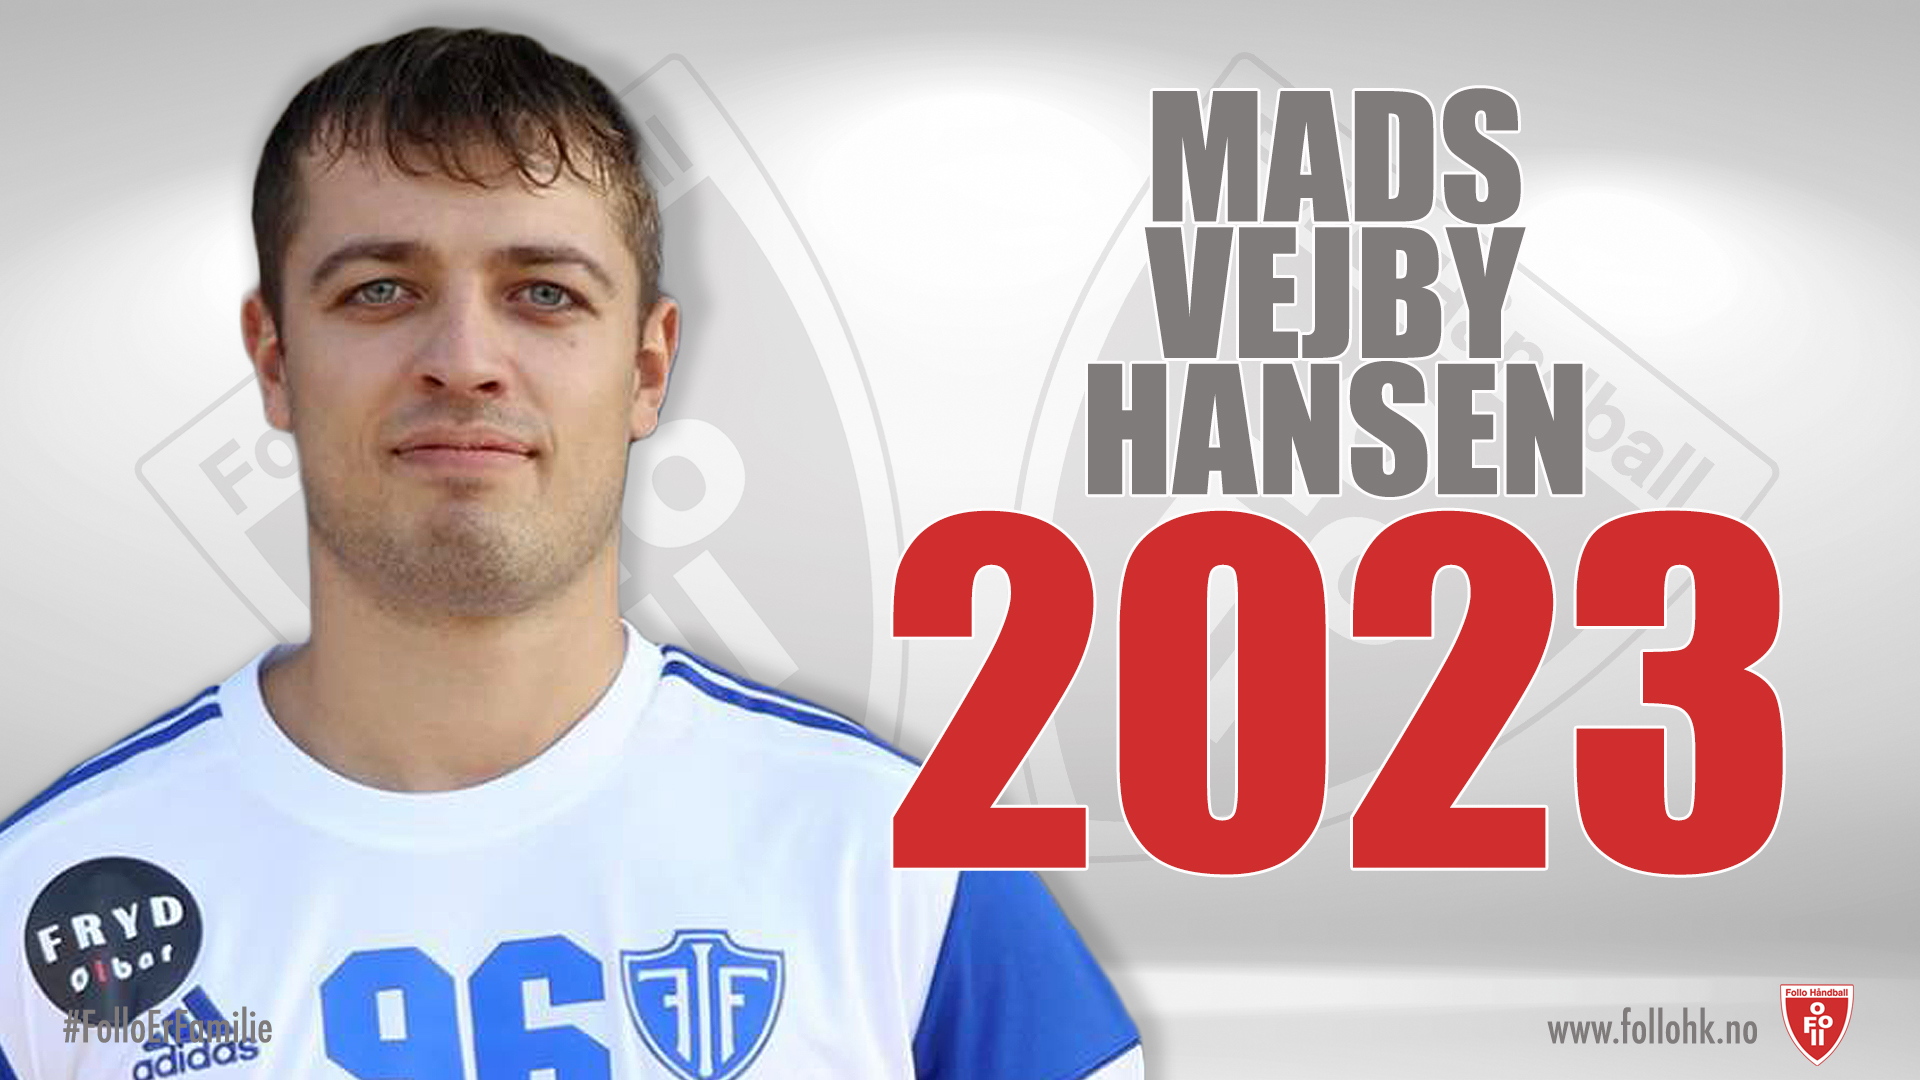 Mads Vejby Hansen